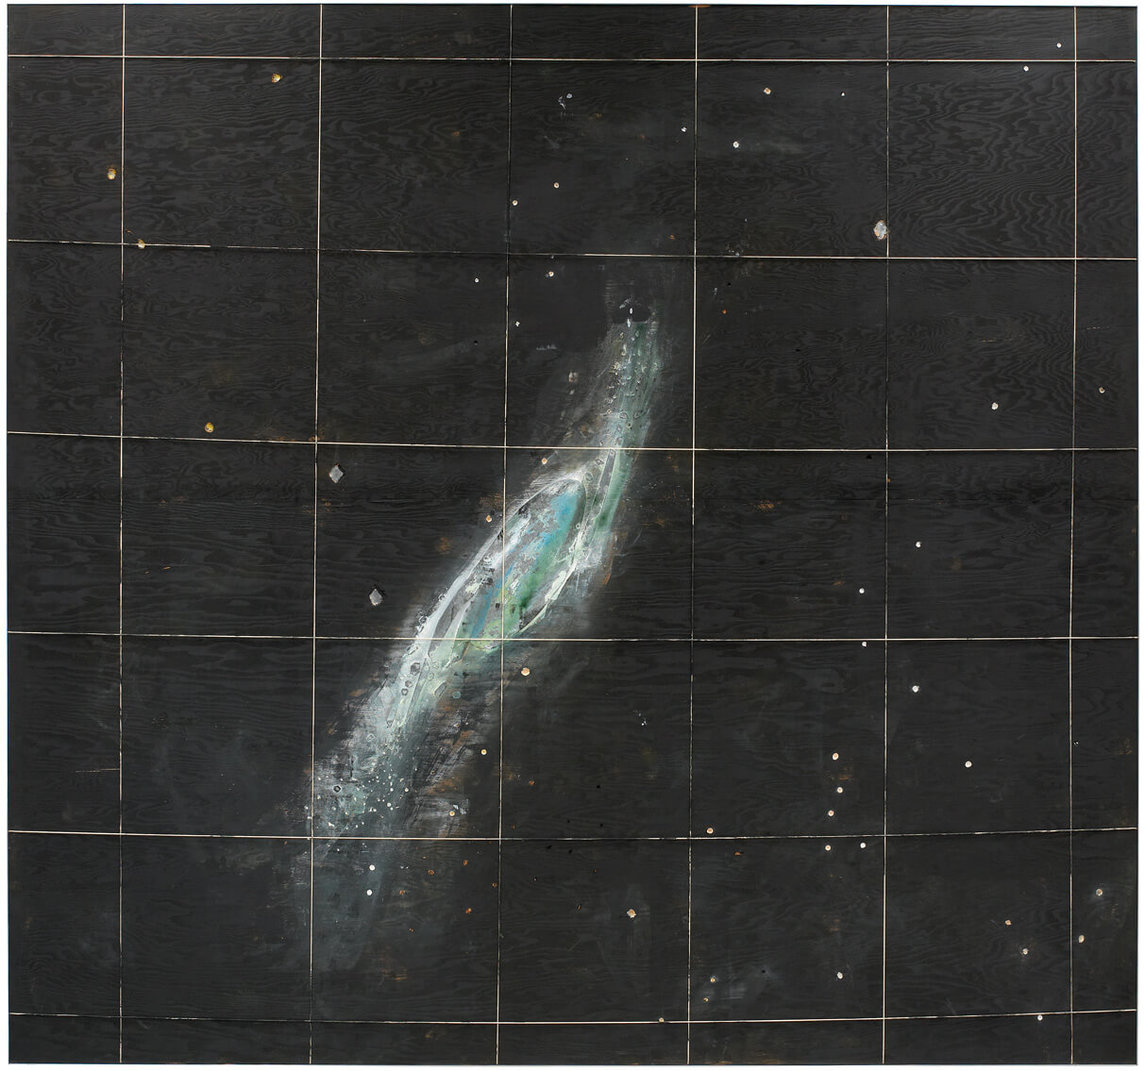 Paterson Ewen, Galaxy NGC-253, 1973